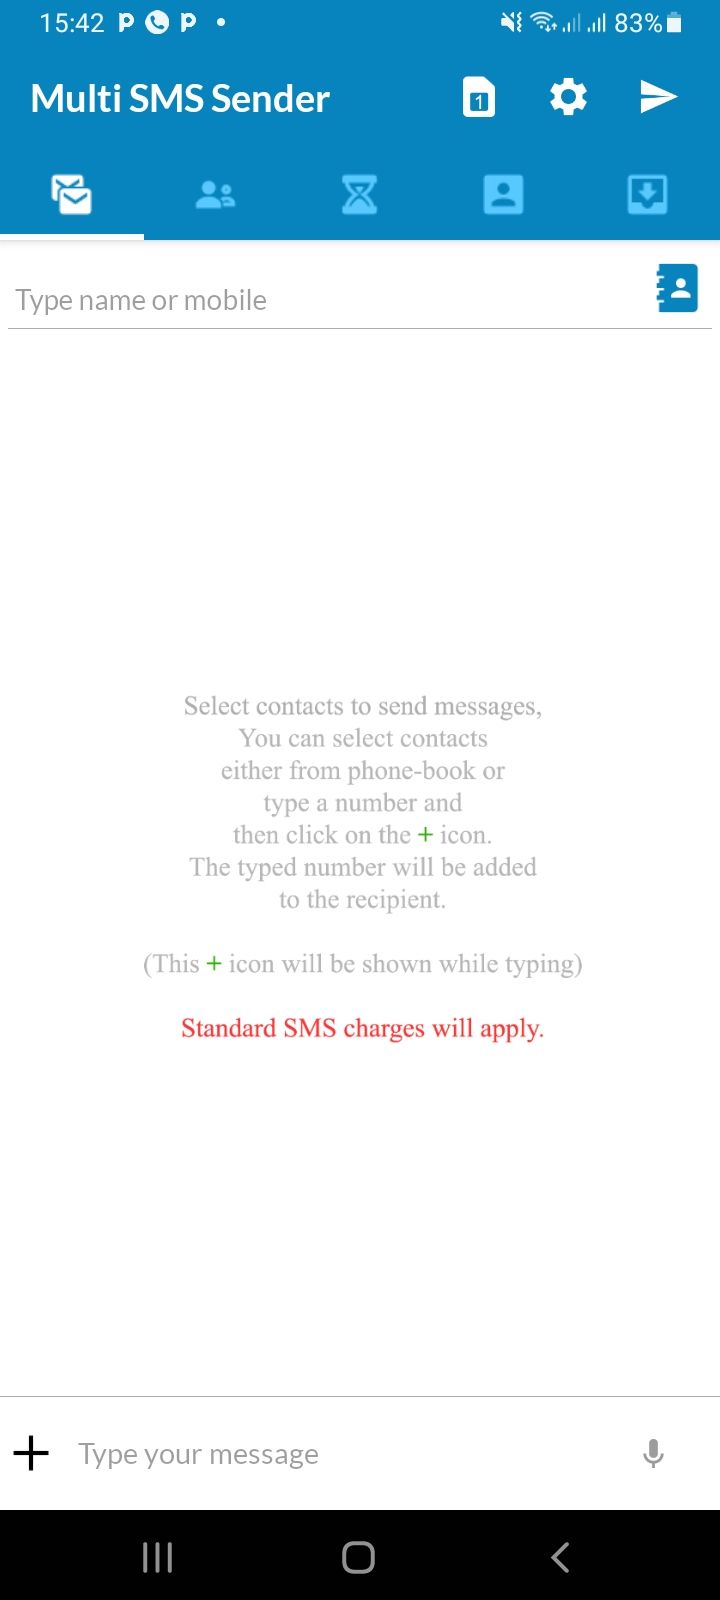 Multi SMS Sender (MSS) landing page